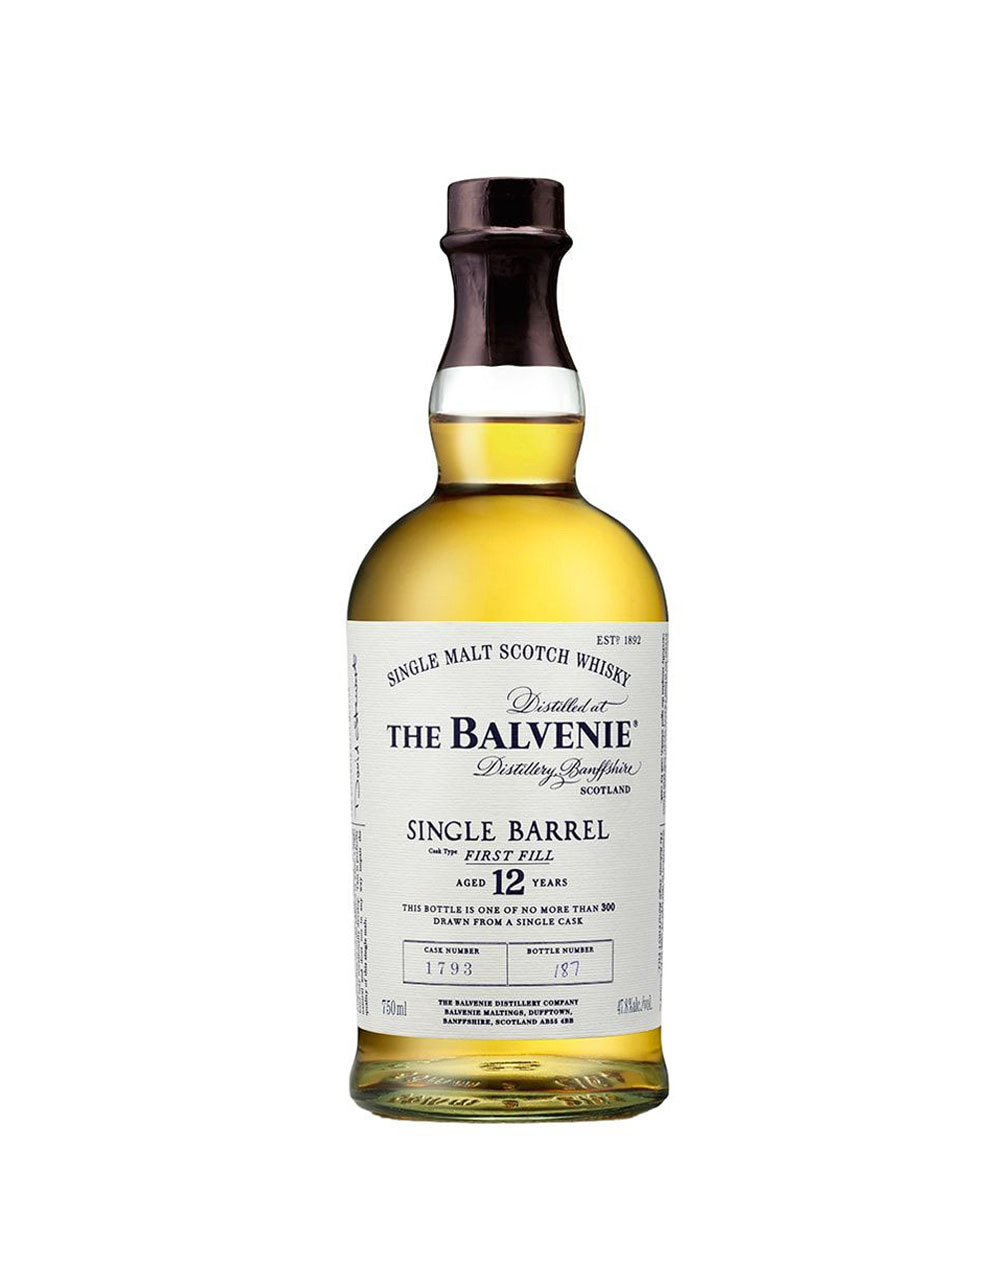 The Balvenie Single Barrel Aged 12 Years